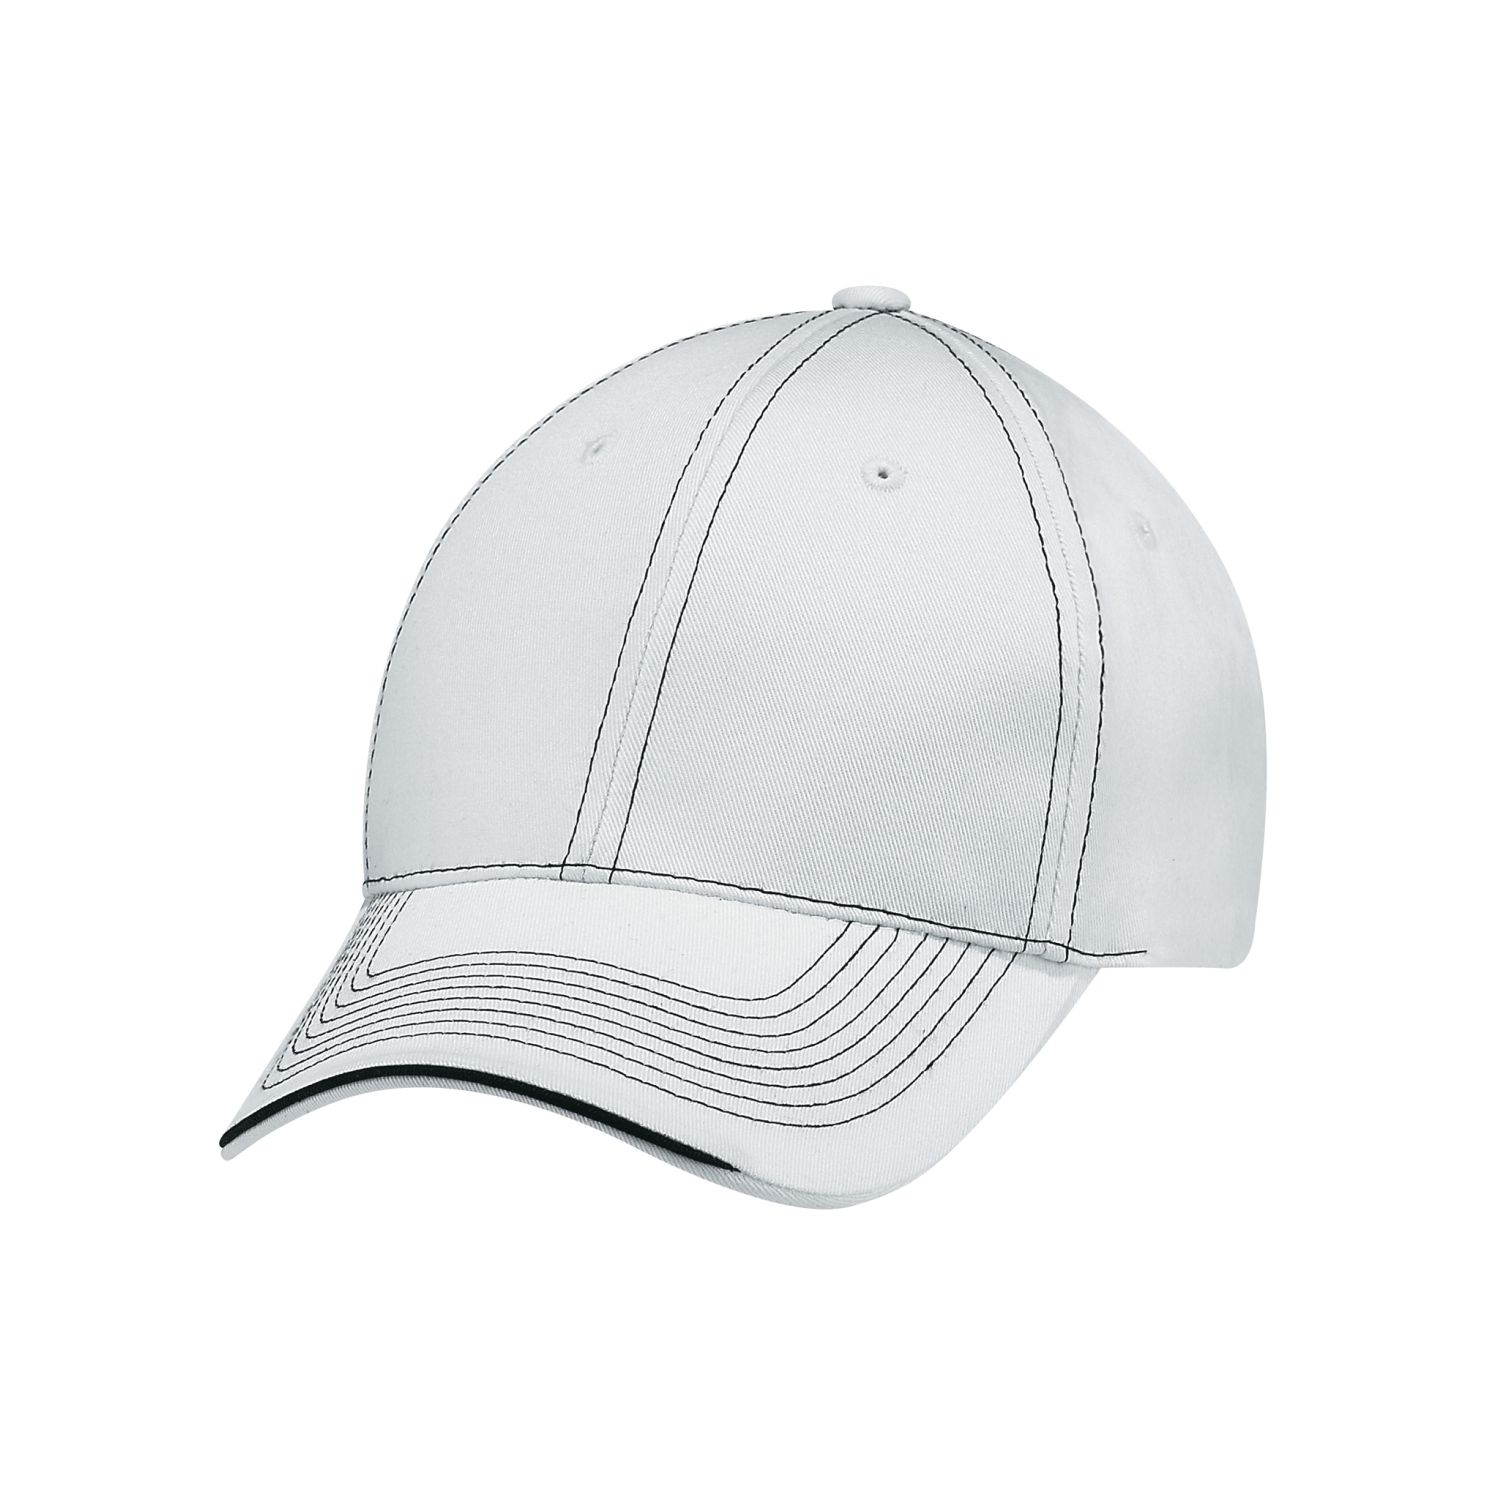 AJM 6-Panel Constructed Full-Fit Hat #6F617M White / Black